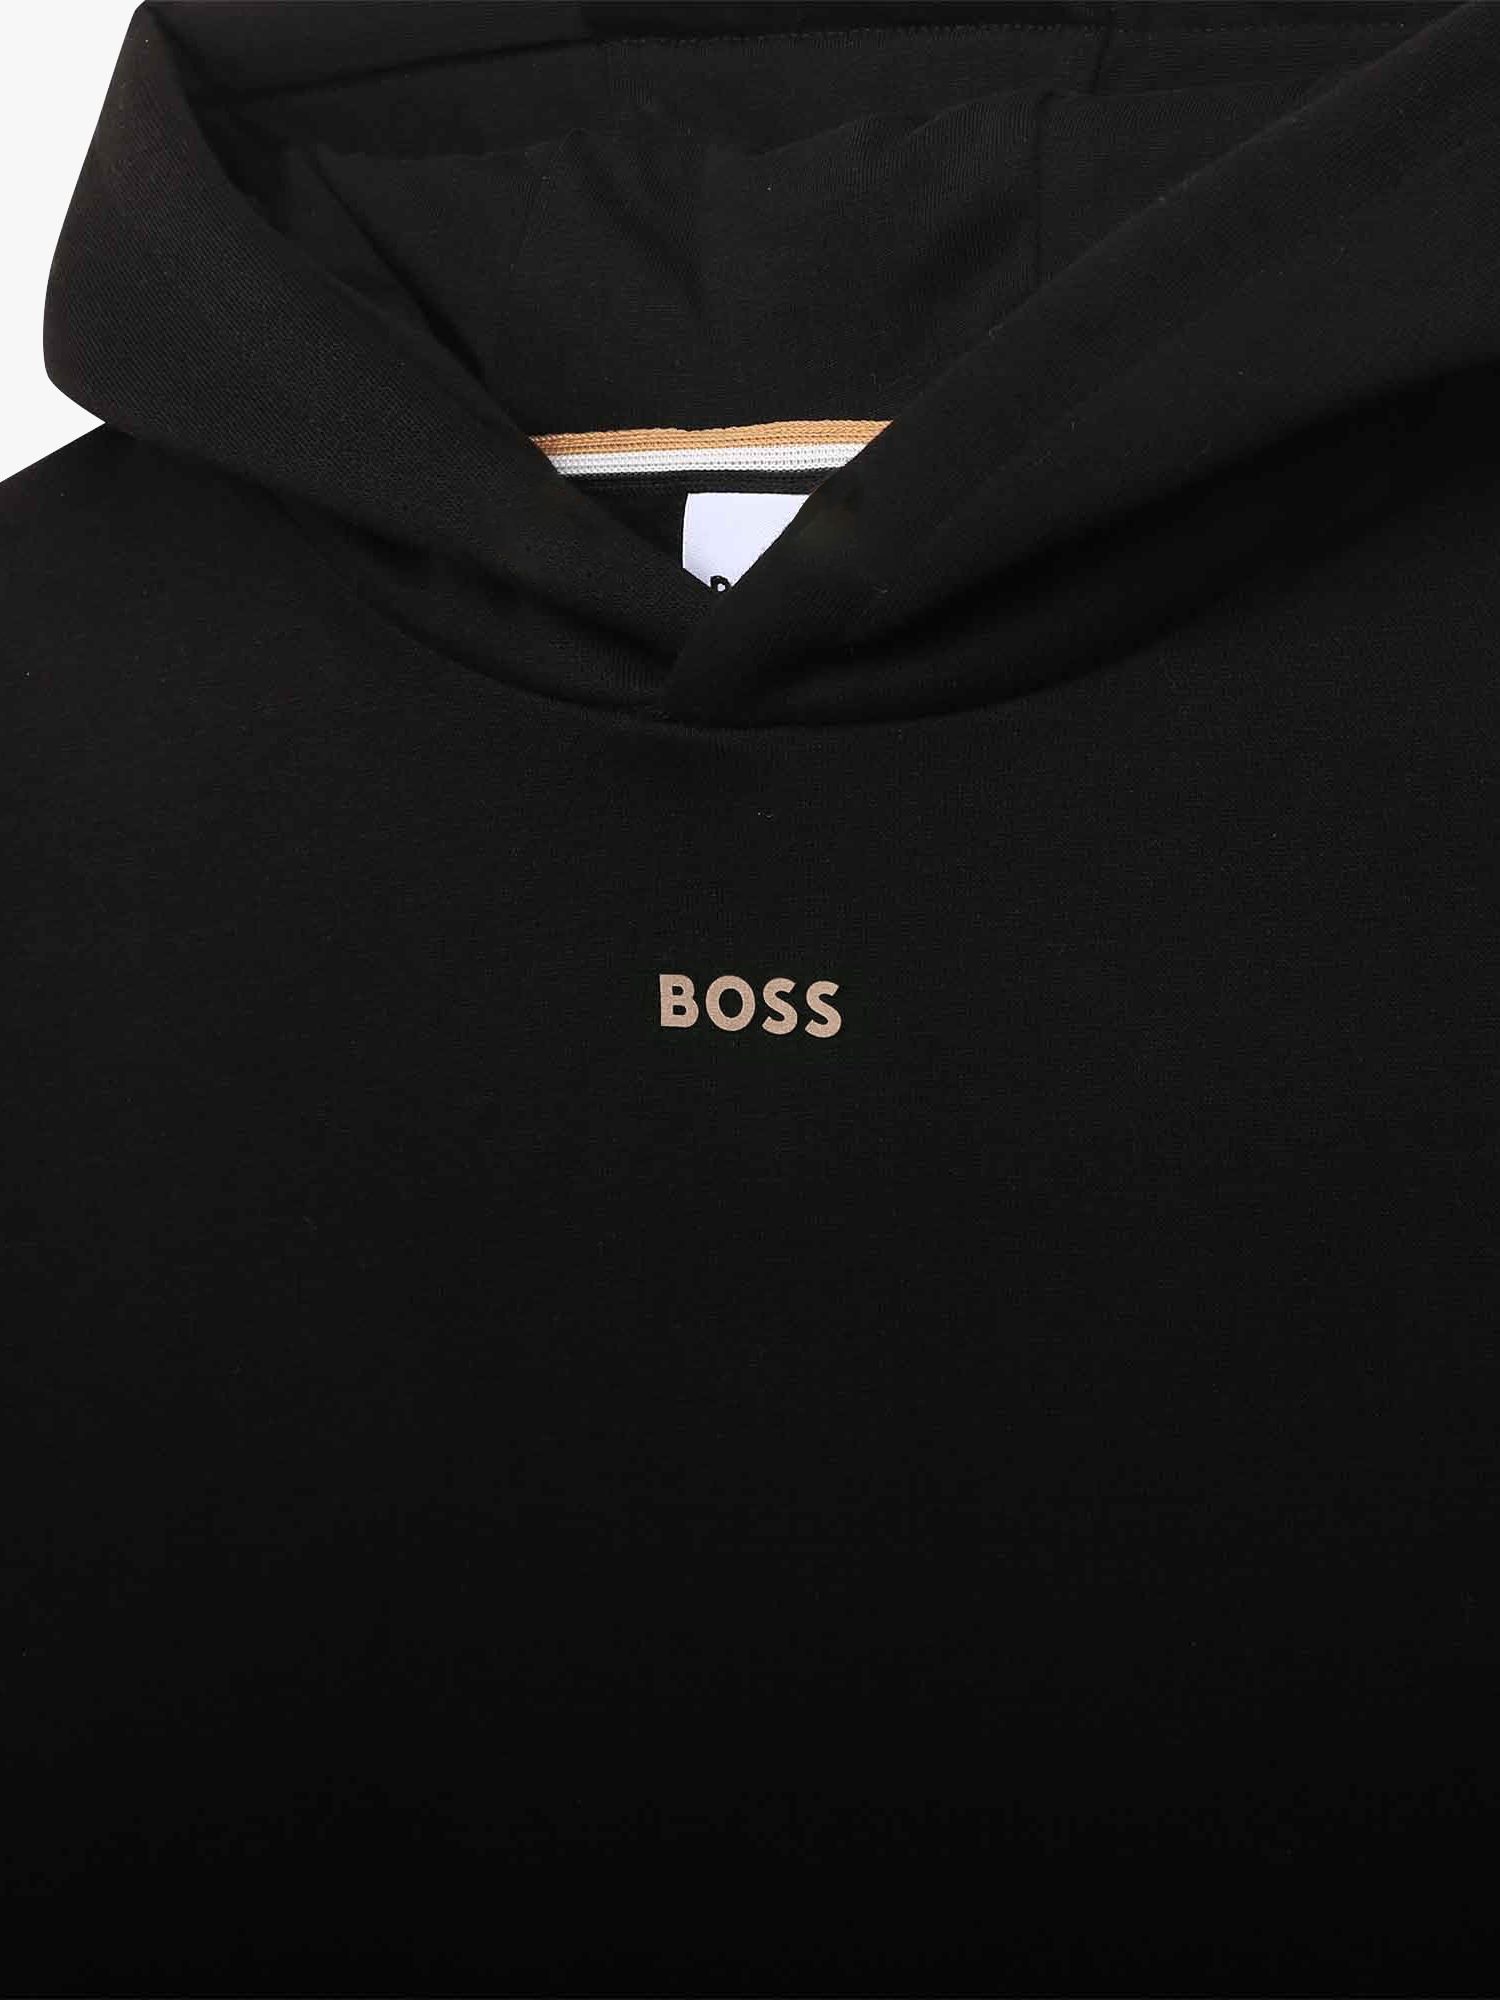 BOSS Kids' Logo Hooded Dress, Black, 4 years